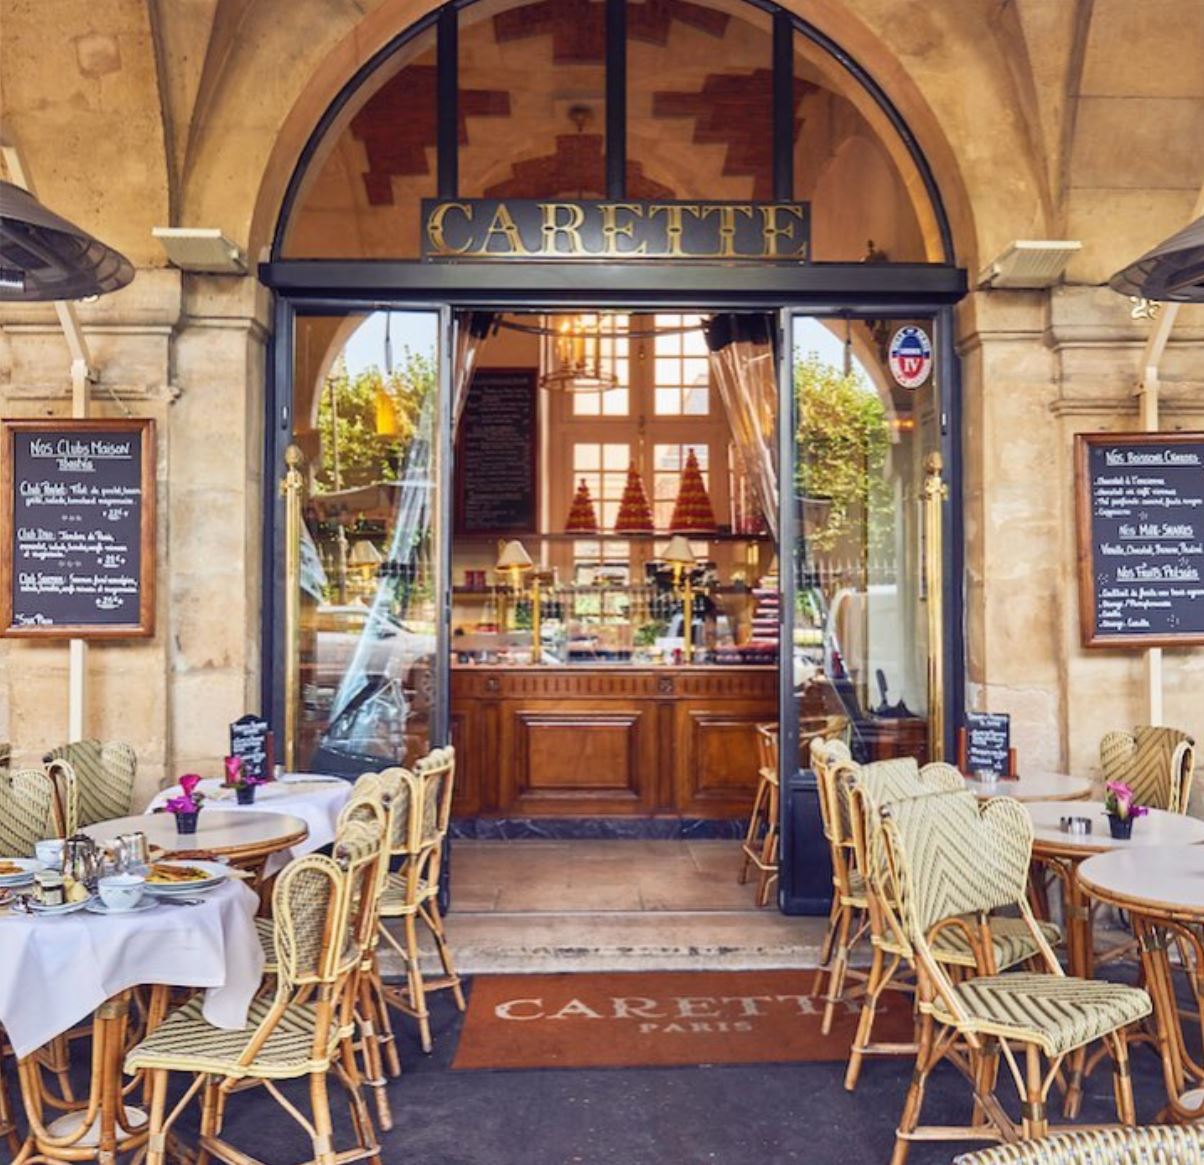 Carette Paris , the legendary tea room